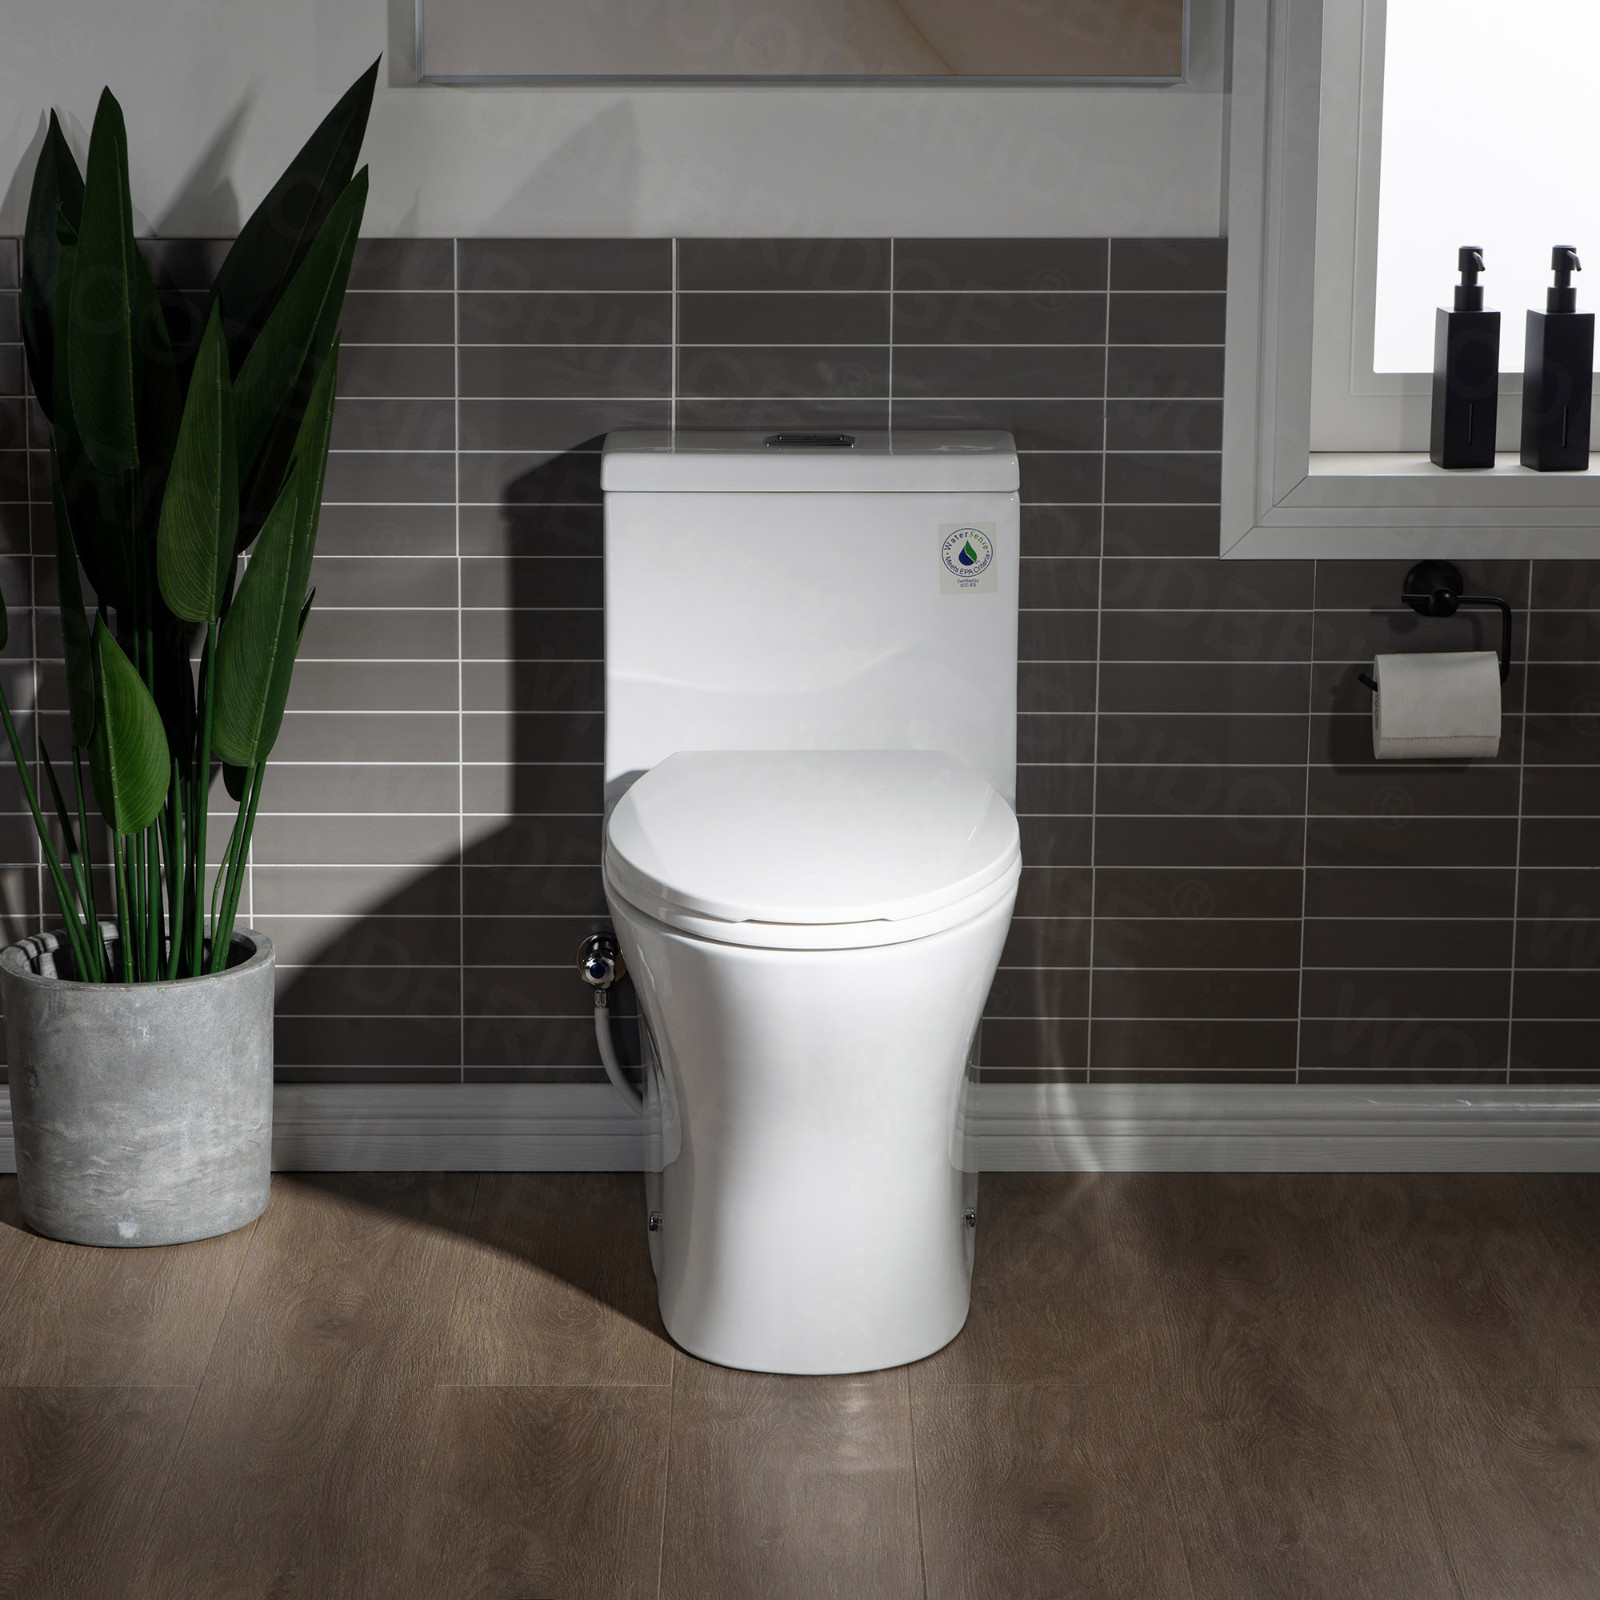  WOODBRIDGE Moder Design, Elongated One piece Toilet Dual flush 1.0/1.6 GPF,with Soft Closing Seat, white, T-0032_10787